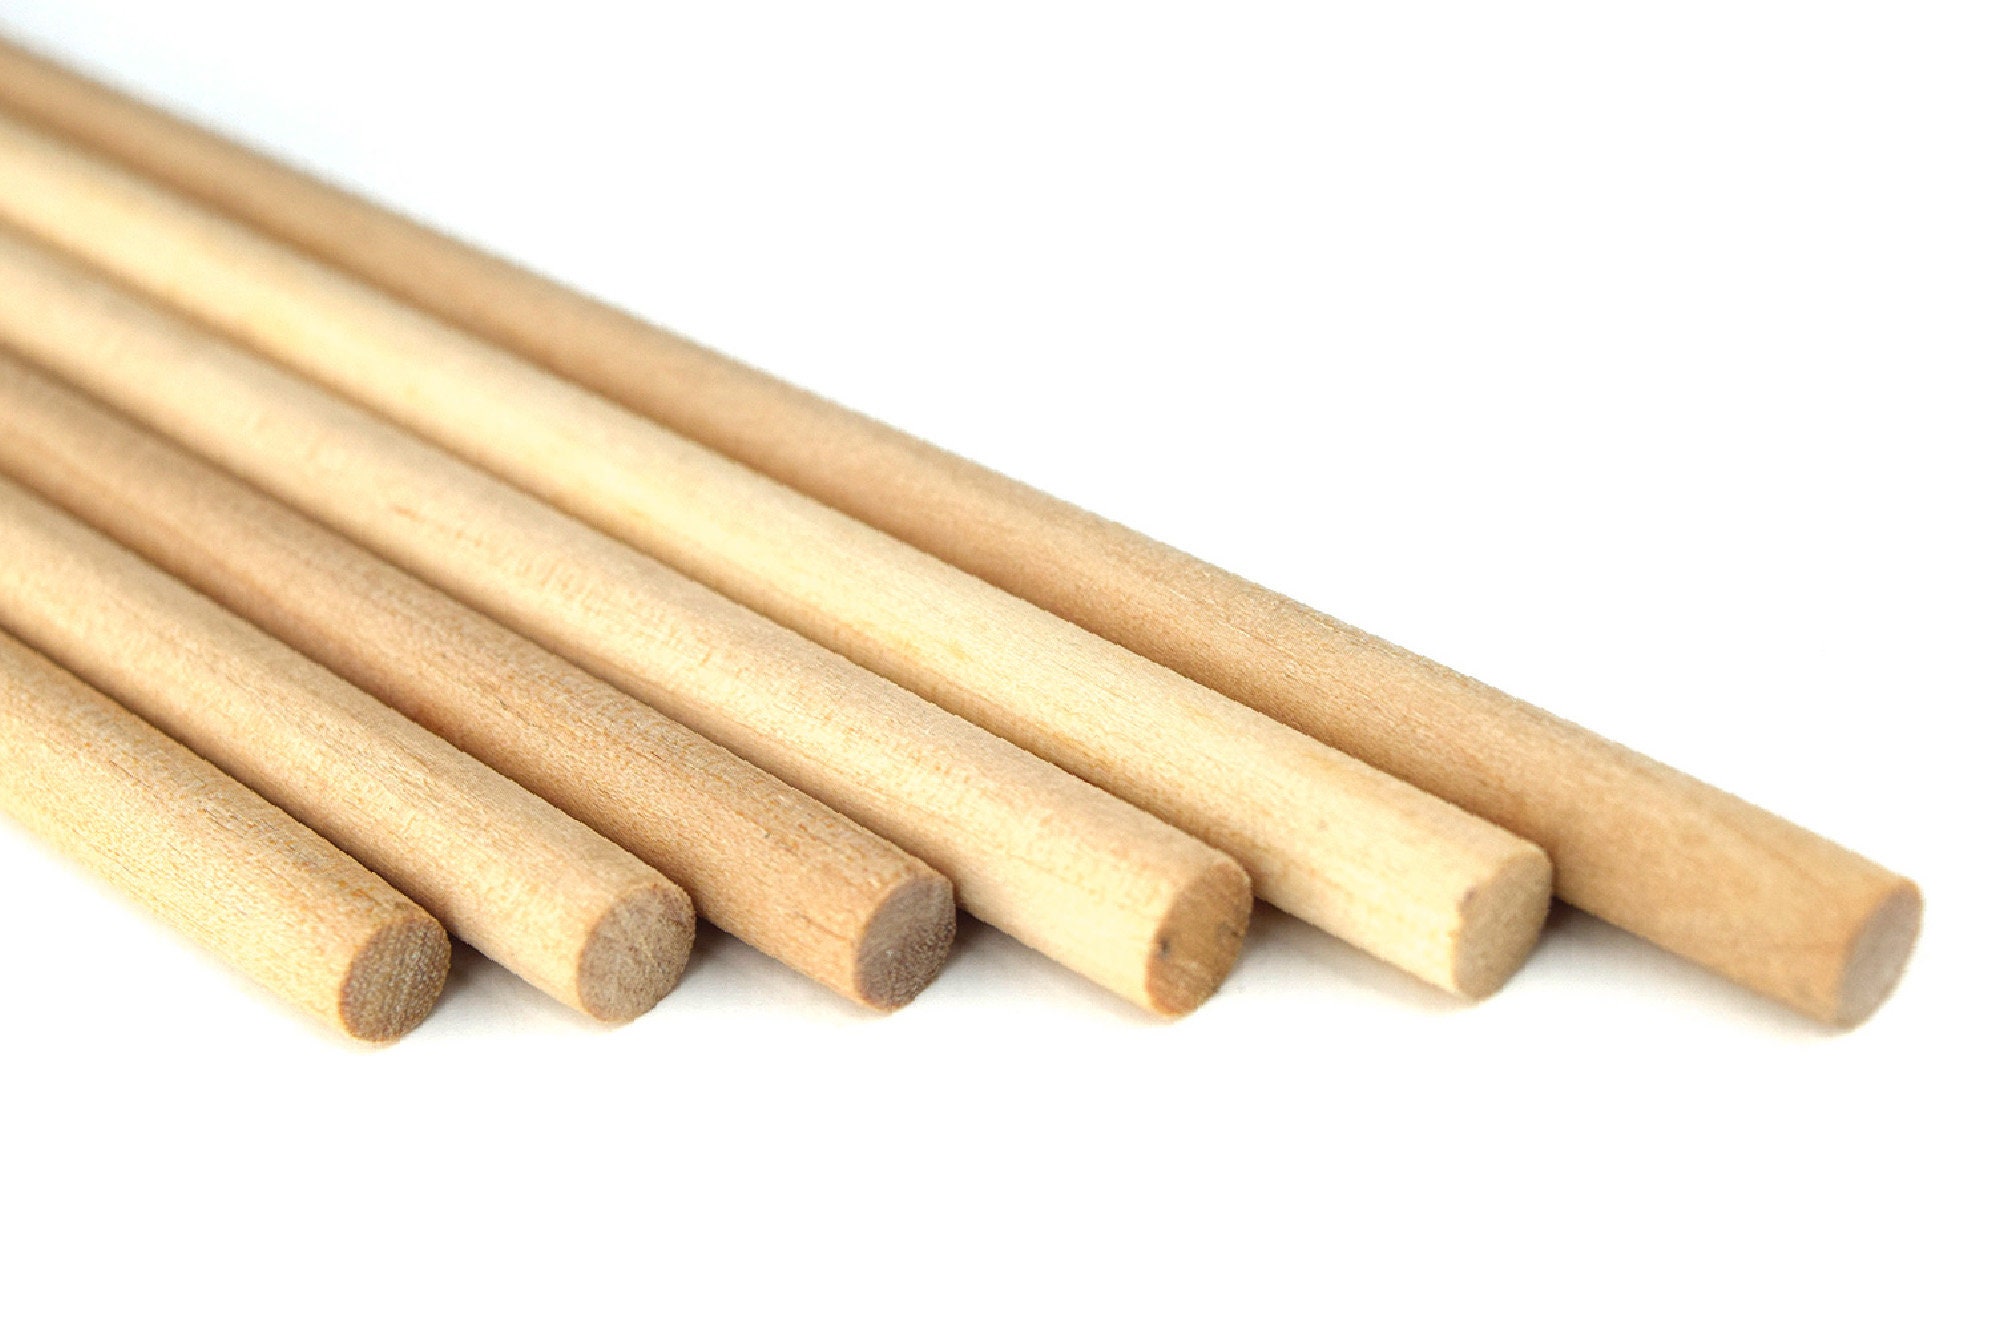 Wooden Dowel Rods 3/16 X 12 Mini Pennant Sticks / Rods 